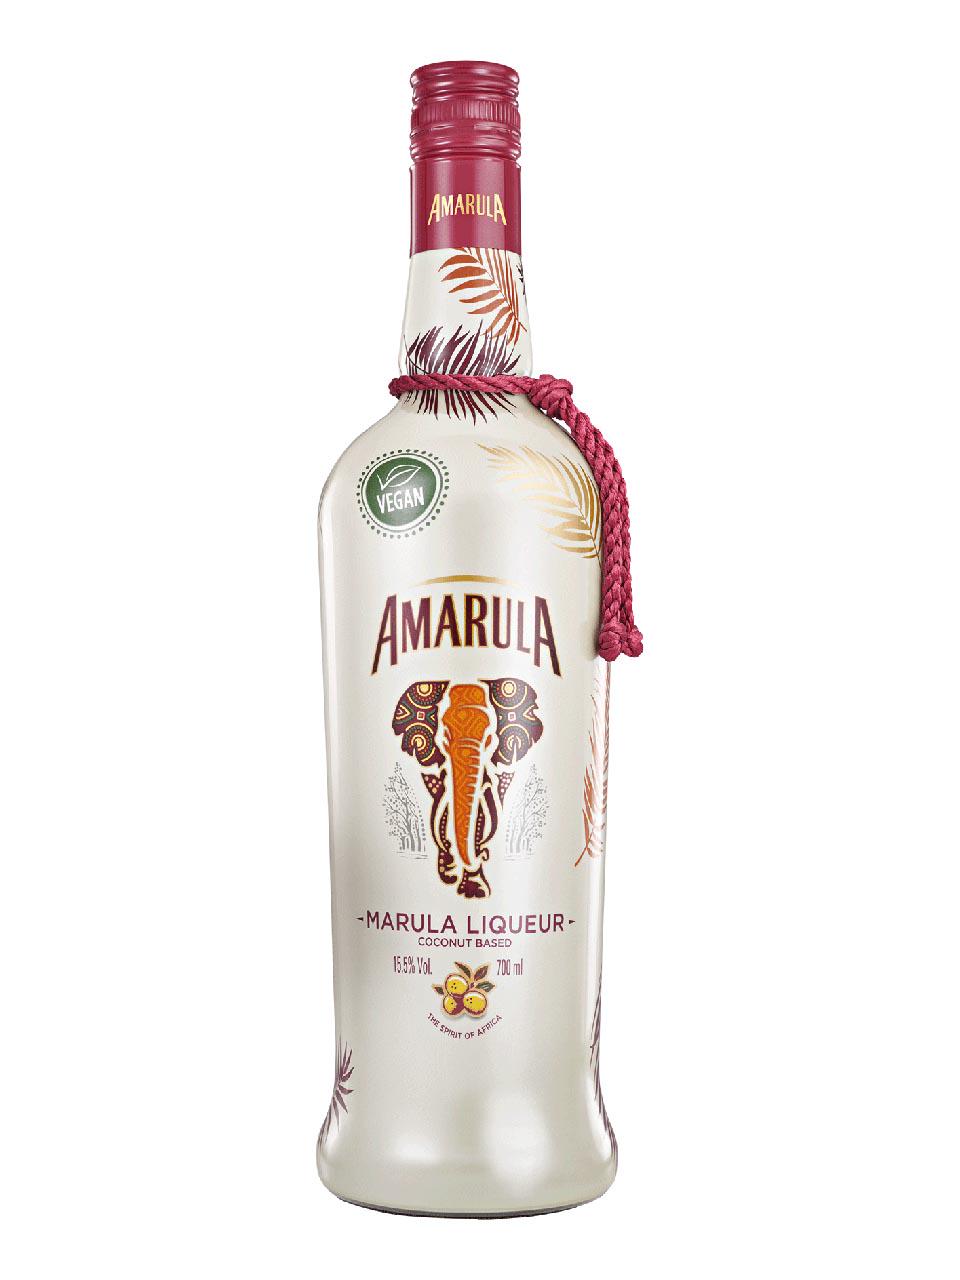 Amarula Vanilla Spice Cream 0,7L (15,5% Vol.) - Amarula - Liqueur